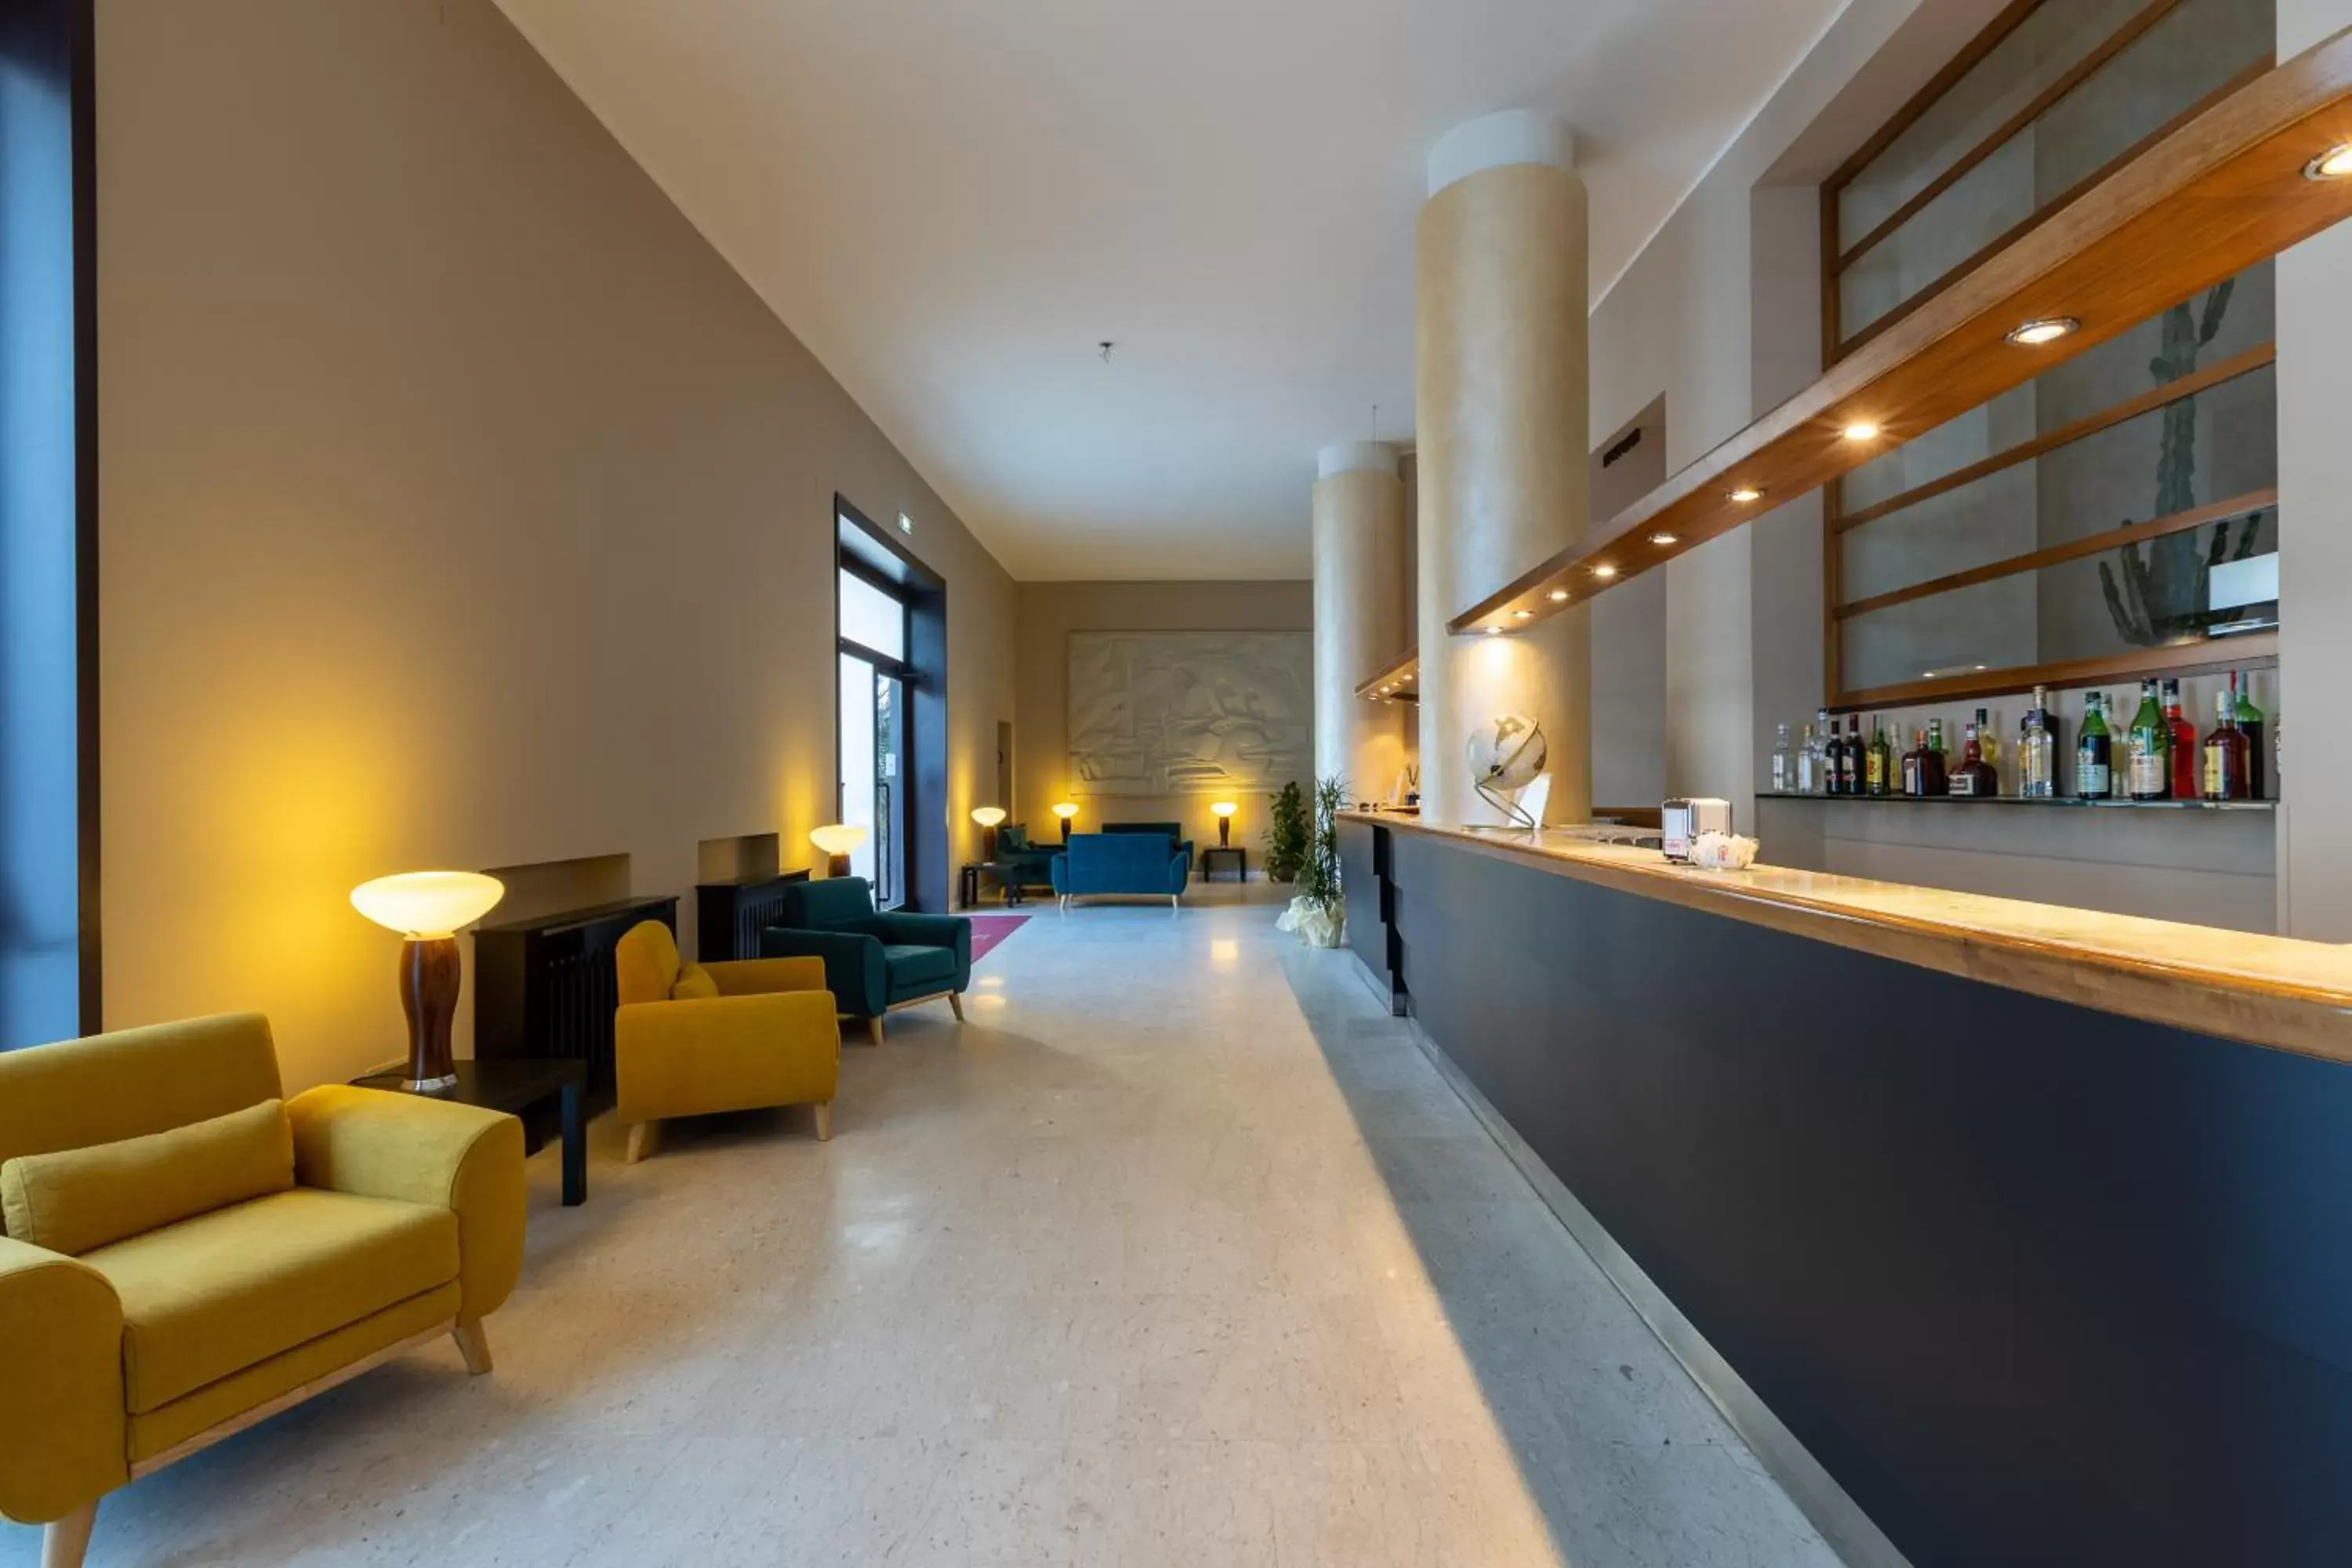 Lobby or reception in Hotel Nuova Grosseto